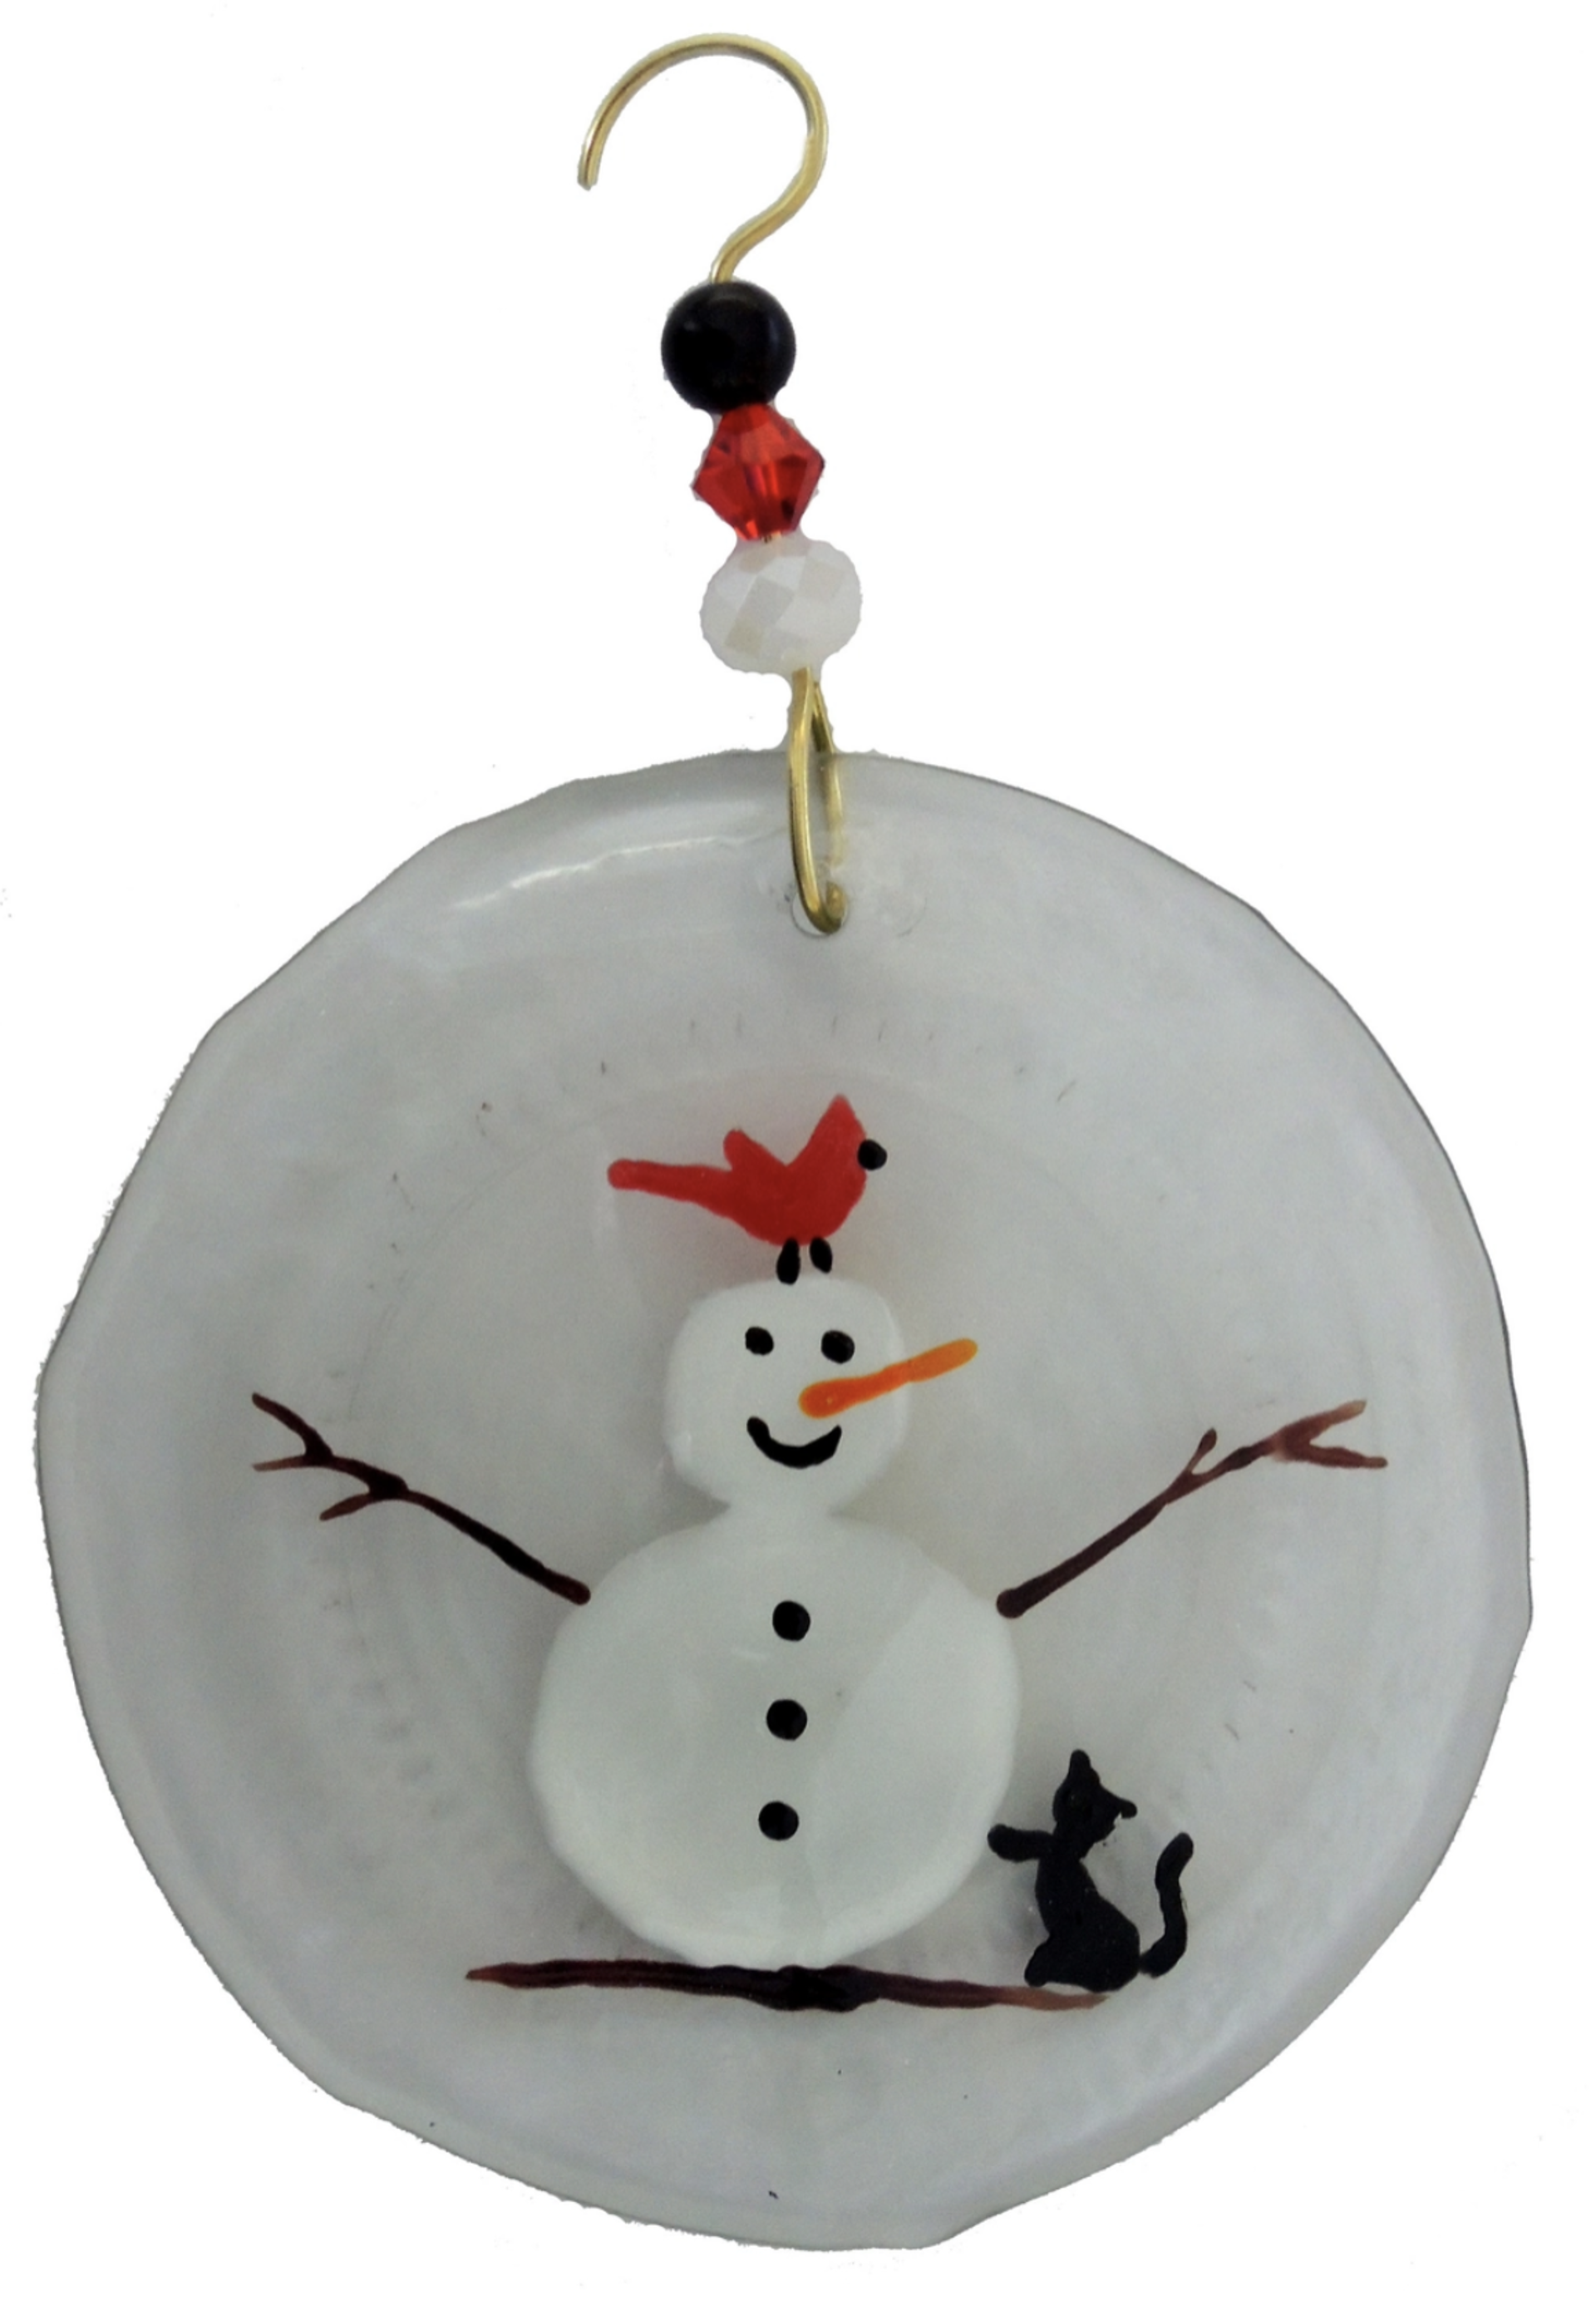 Ornament - Snowman, Redbird & Cat by Wine Bottle Art